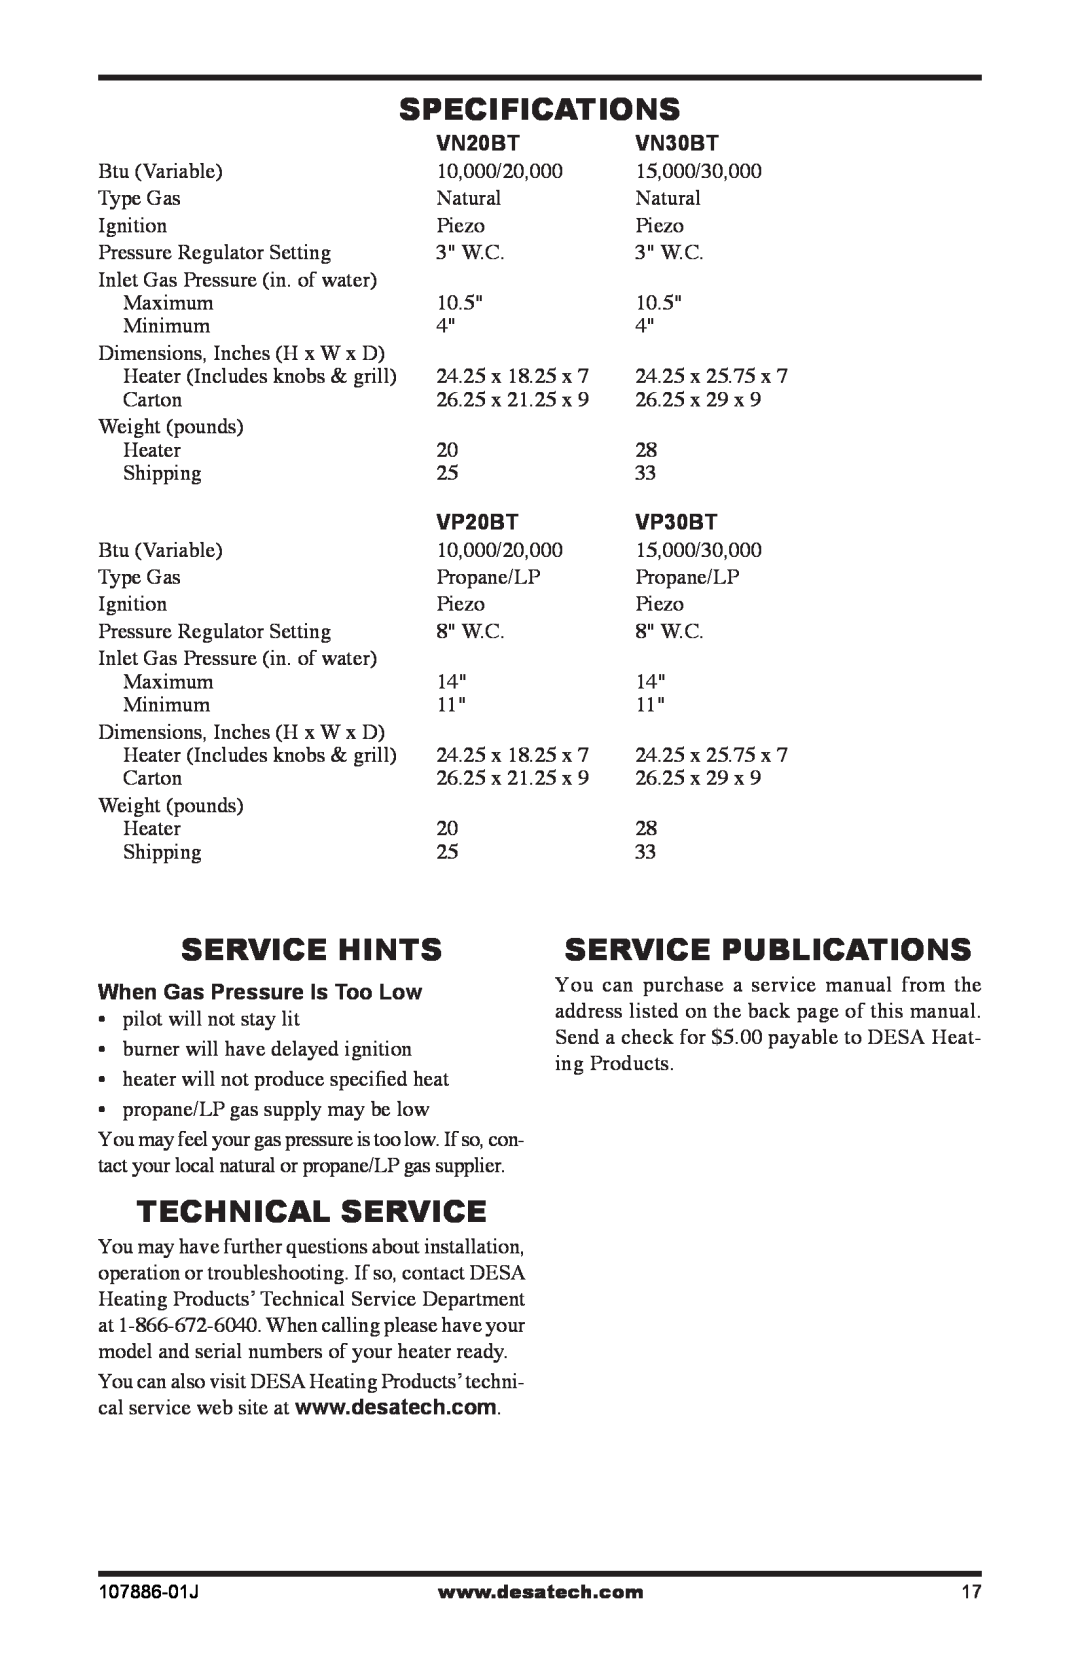 Desa VP20BT Specifications, Service Hints, Technical Service, Service Publications, VN20BT, VN30BT, VP30BT 